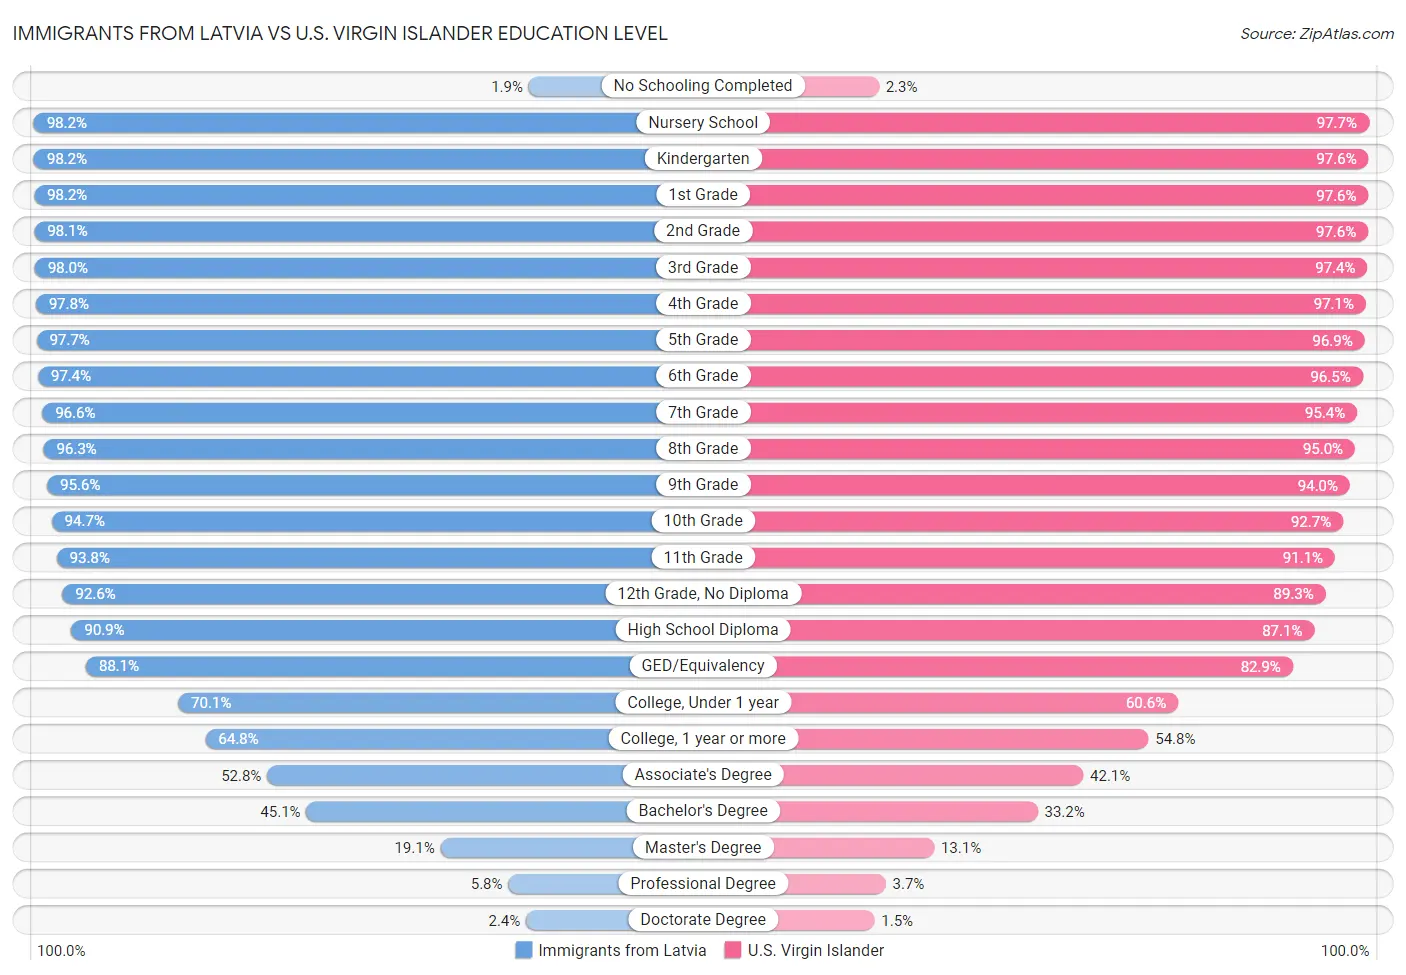 Immigrants from Latvia vs U.S. Virgin Islander Education Level